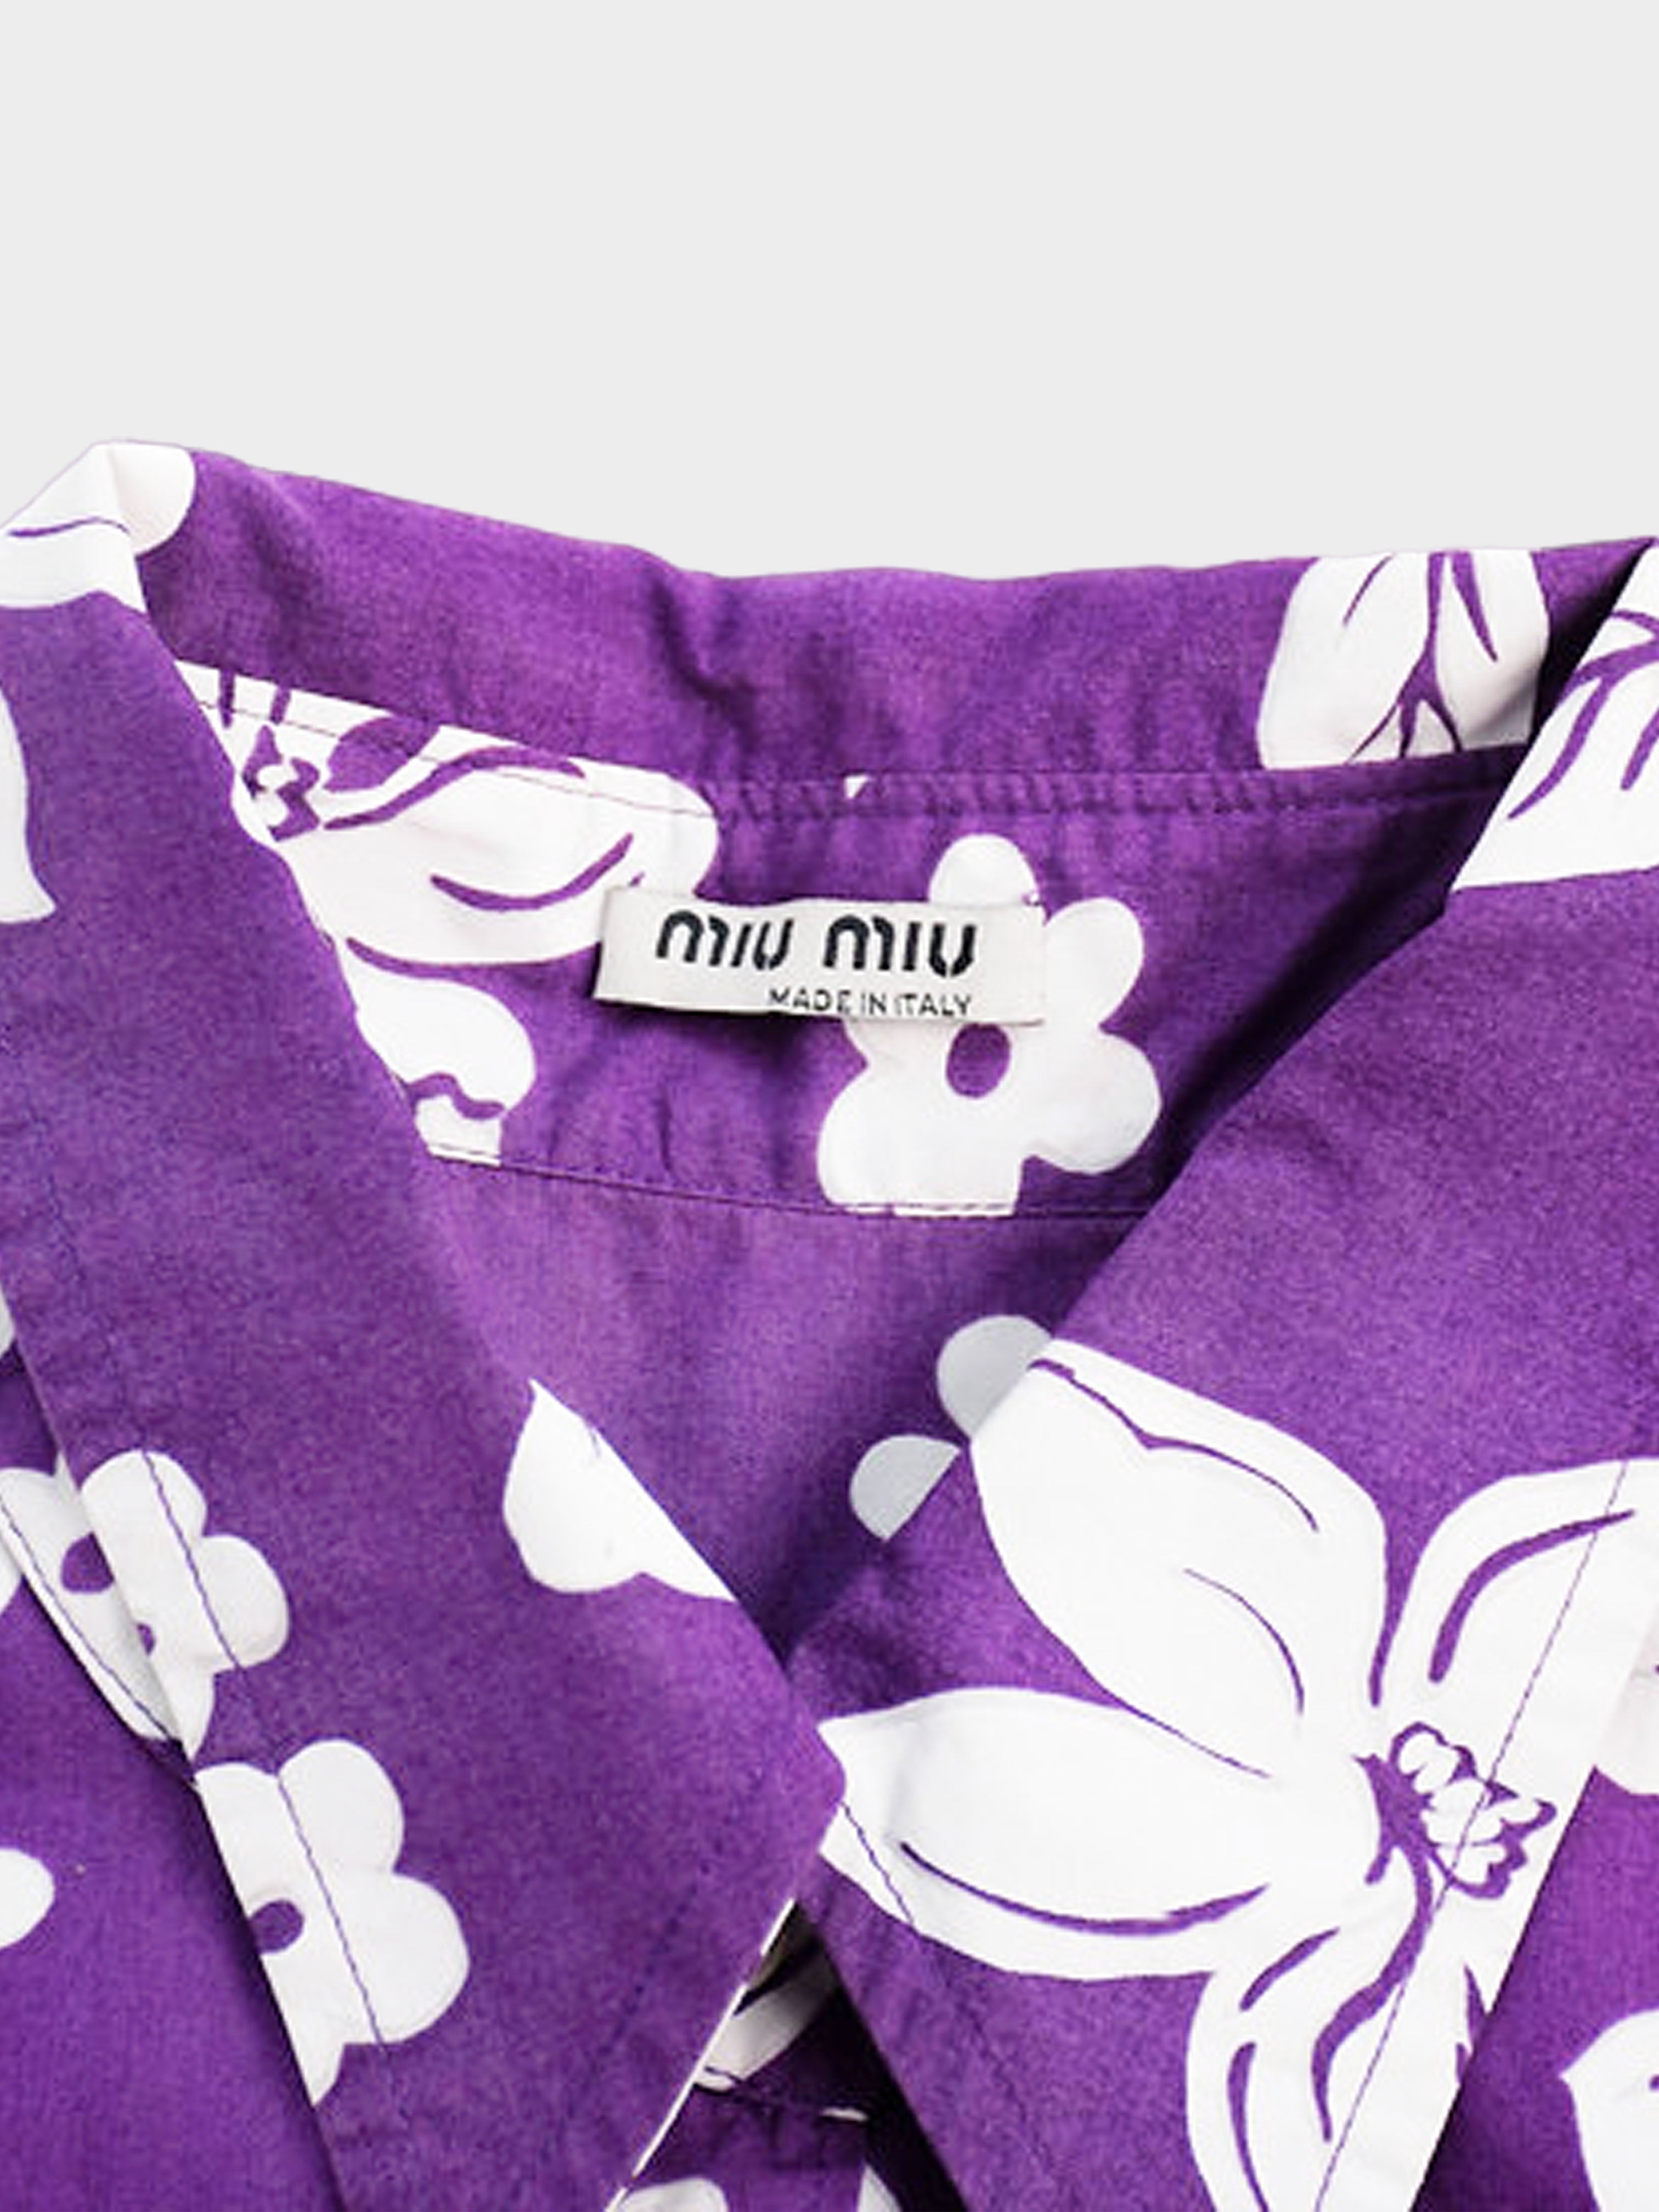 Miu Miu SS 2003 Purple Floral Buttoned Up Top